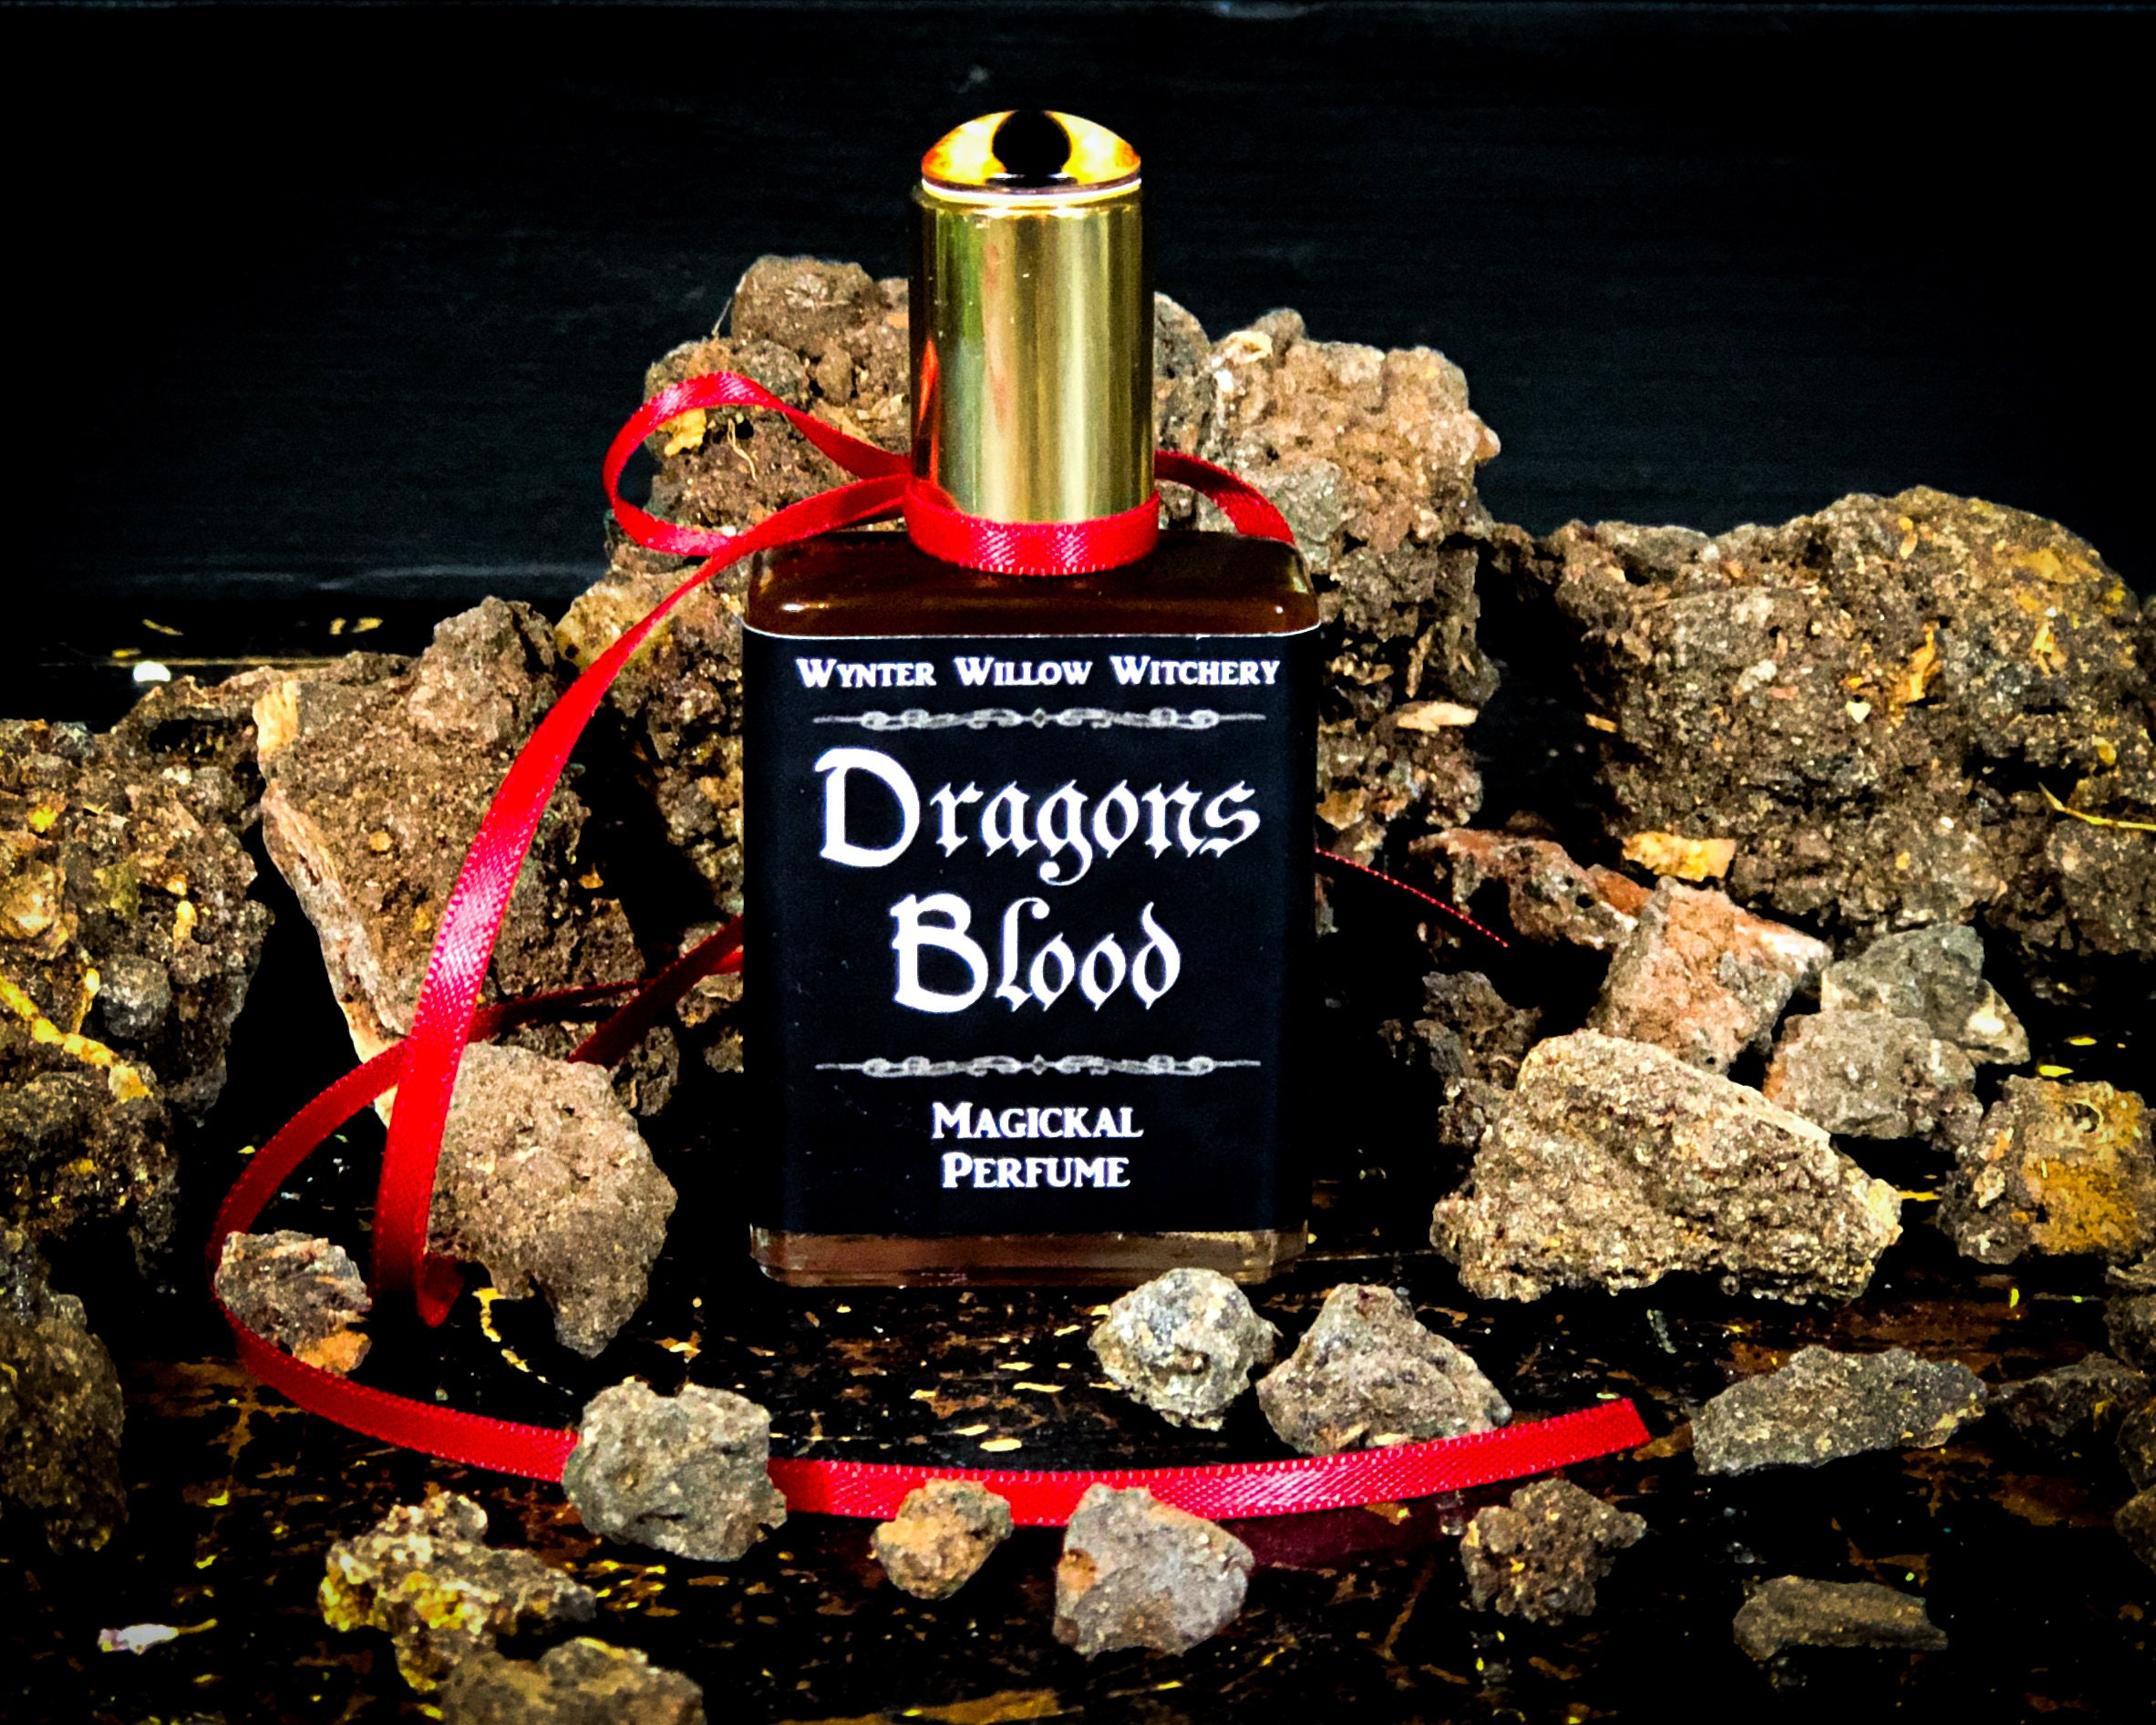  Dragons Blood Oil 1/2 oz, Handmade with Herbs & Essential Oils, Spiritual Purification, Strength, Power Rituals